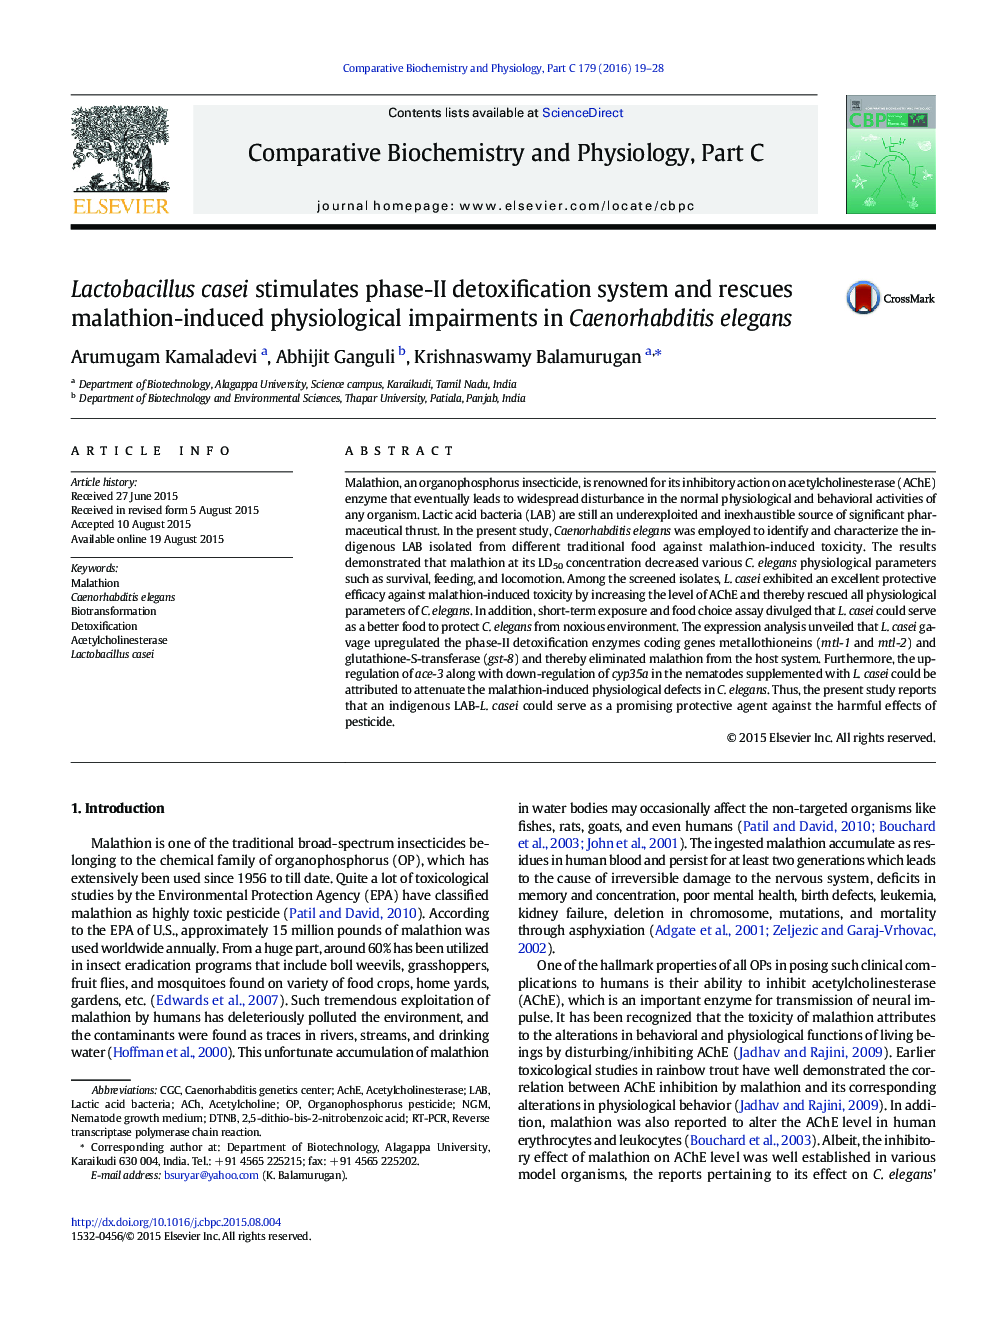 Lactobacillus casei stimulates phase-II detoxification system and rescues malathion-induced physiological impairments in Caenorhabditis elegans